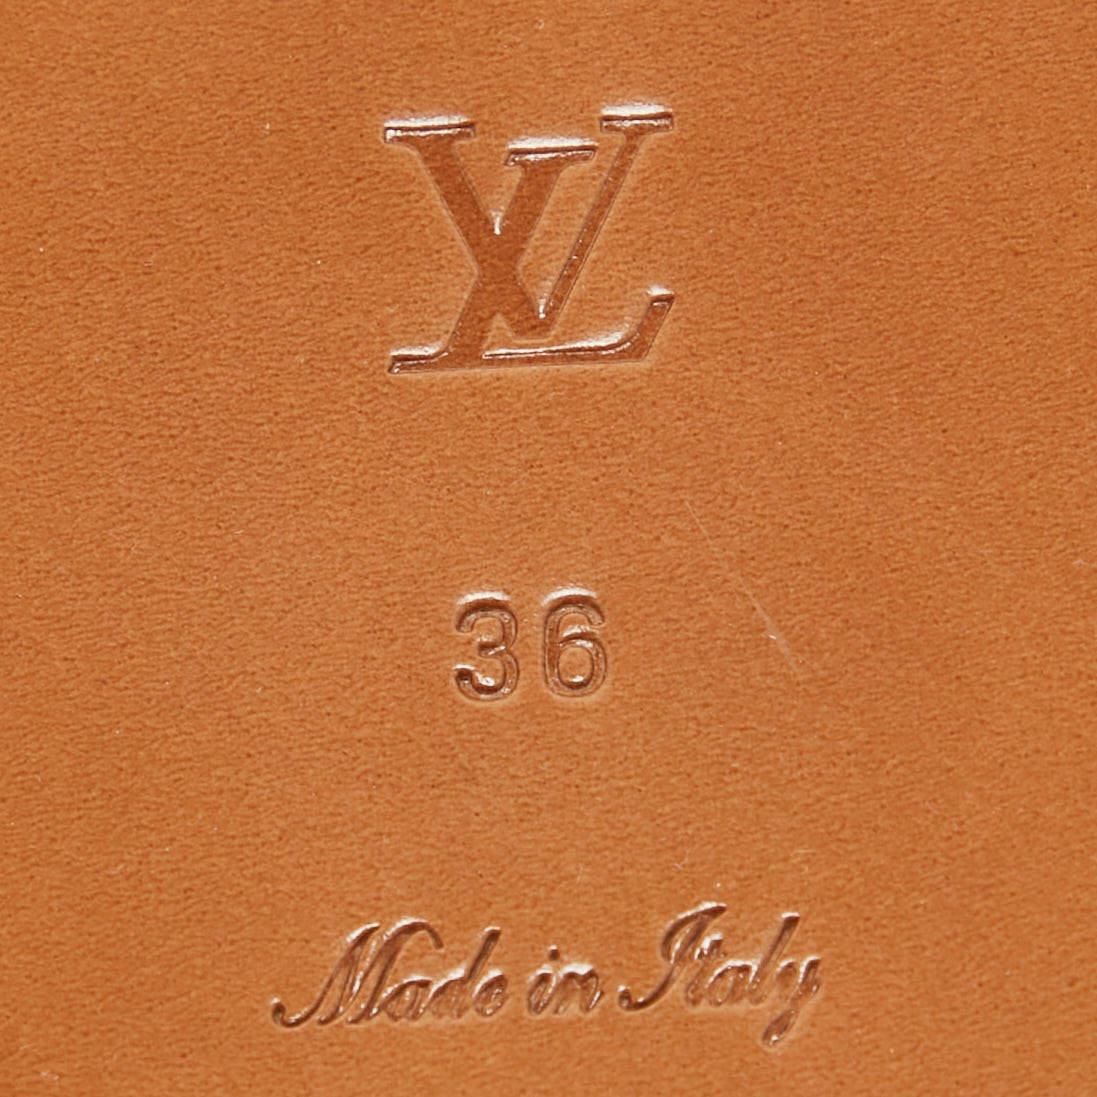 Louis Vuitton Tan Leather Lock It Flat Slides Size 36 2